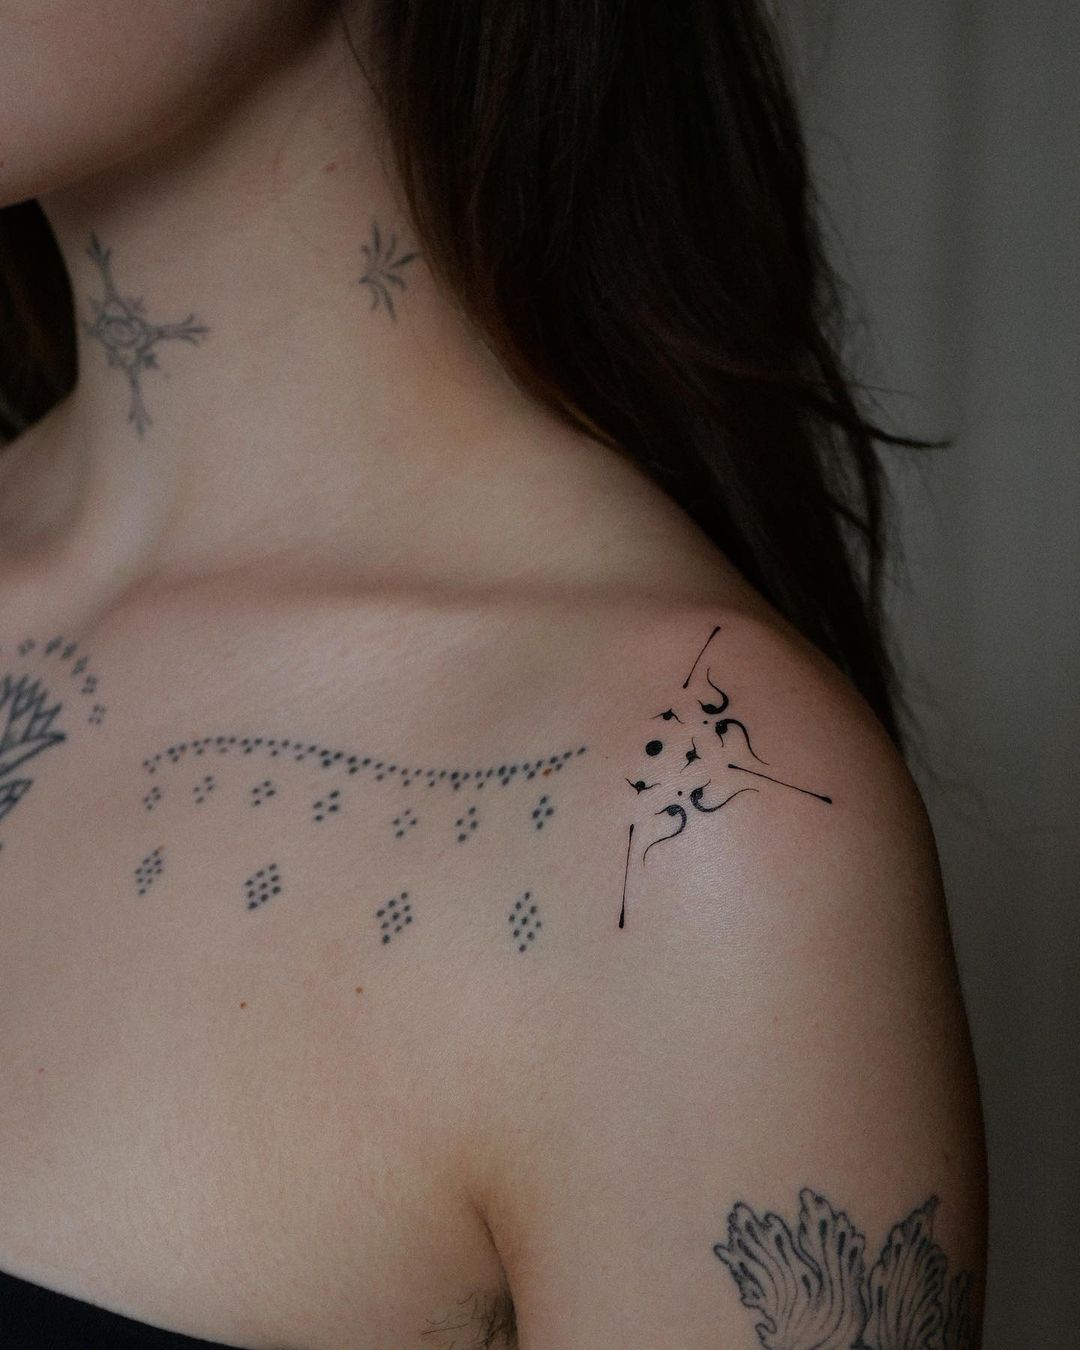 star tattoo on shoulder by kamila ttt